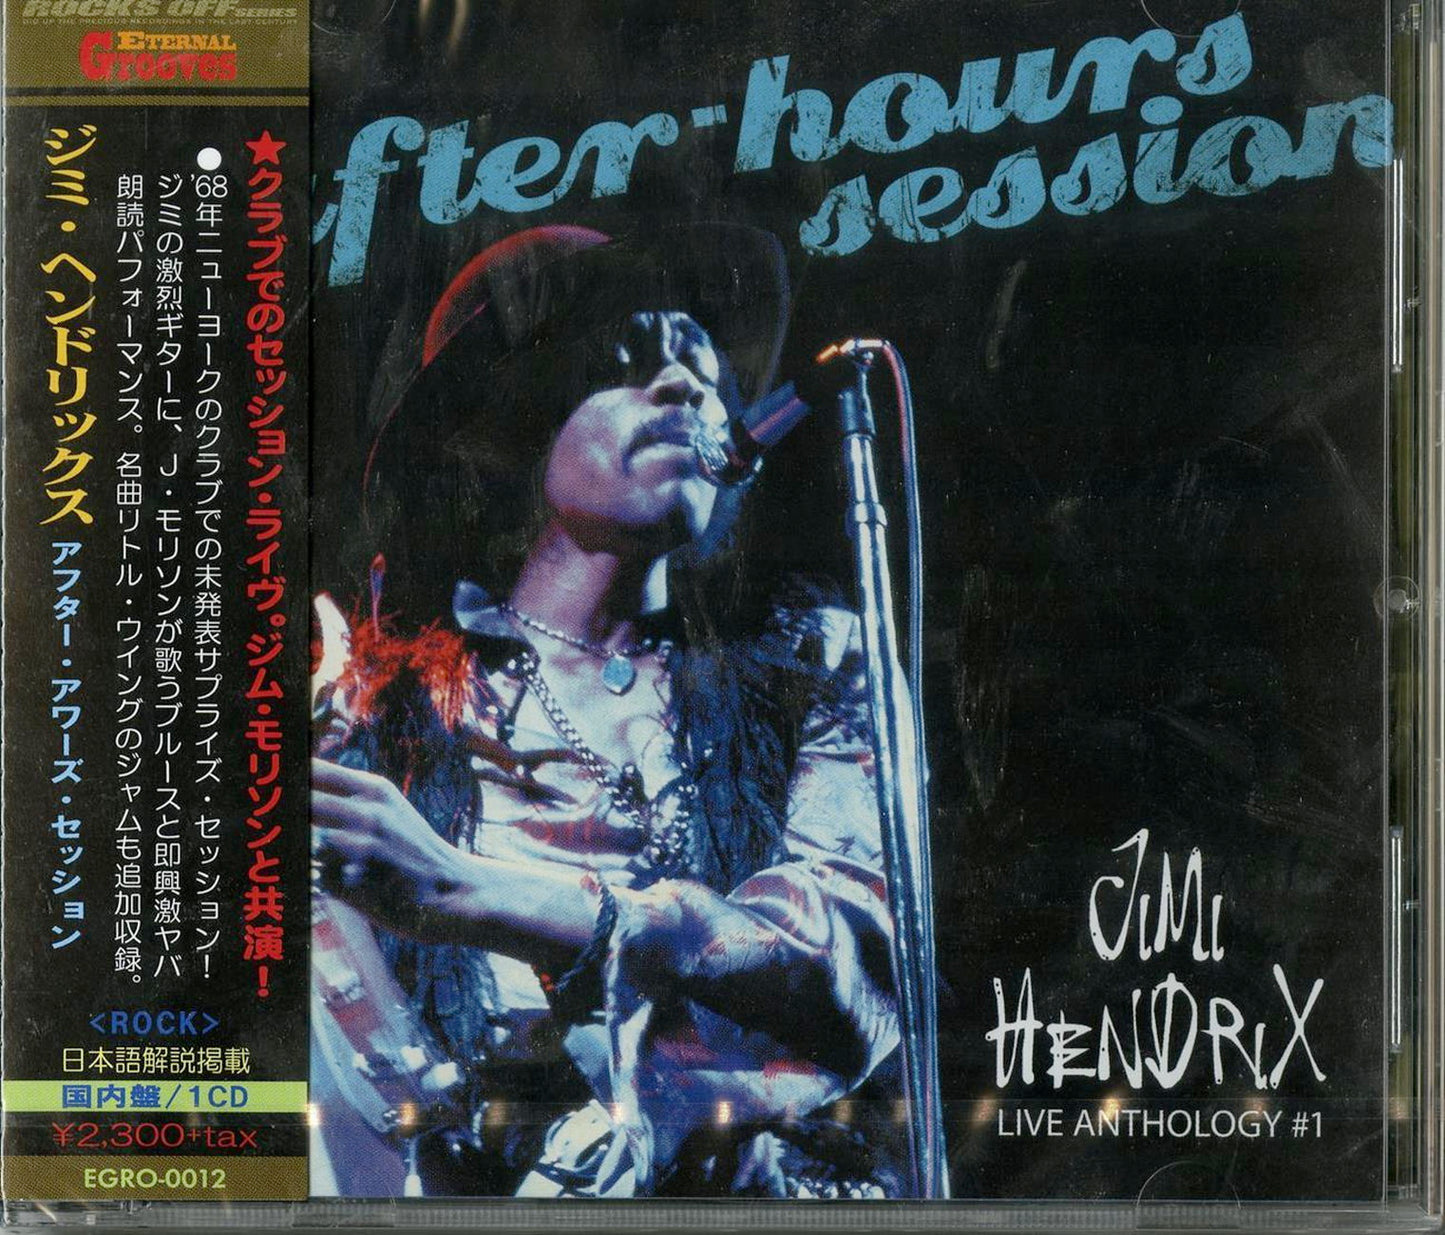 Jimi Hendrix - Live Anthology #1 - Japan CD